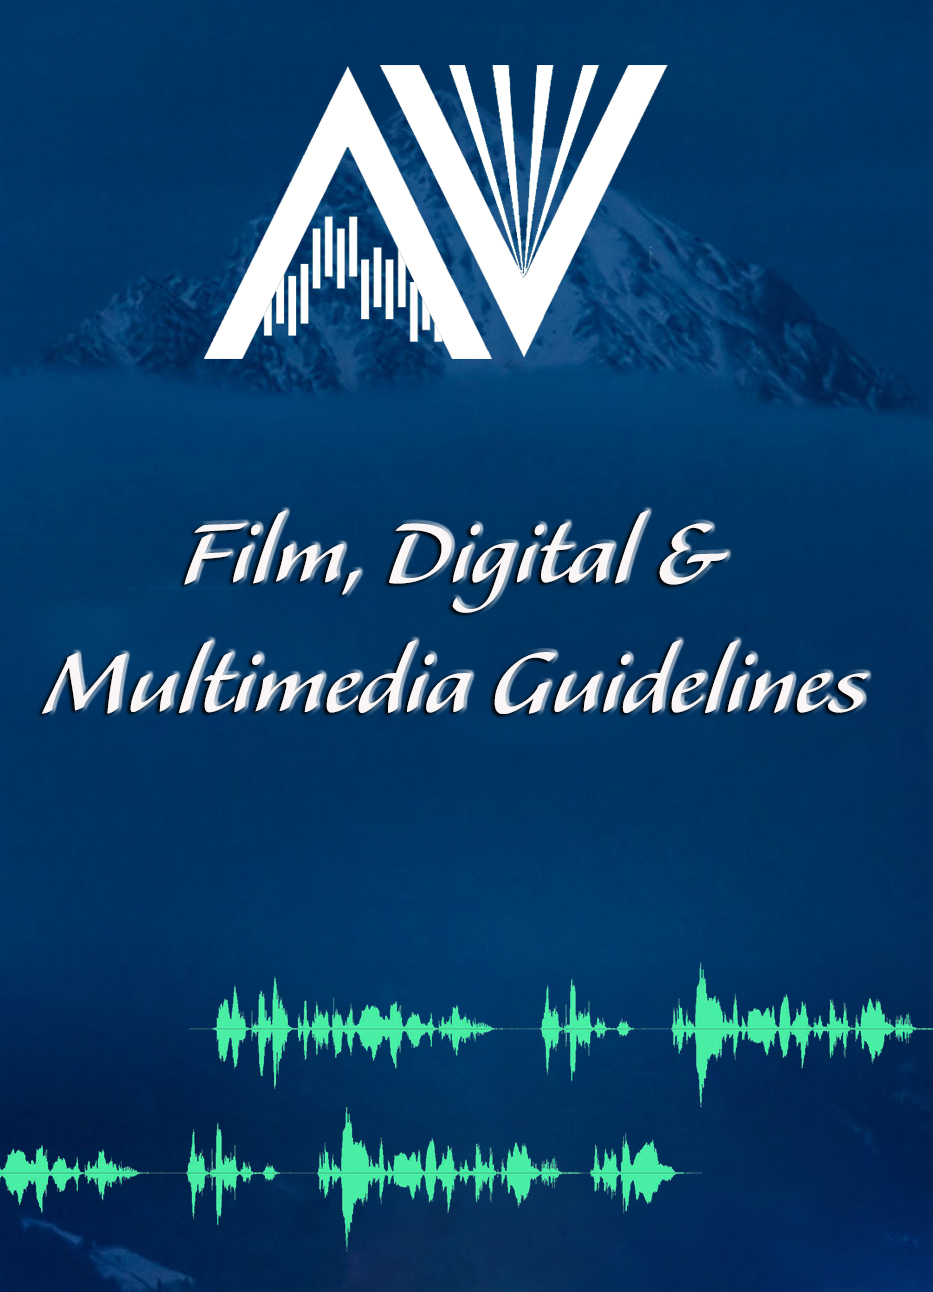 Multimedia Guidelines